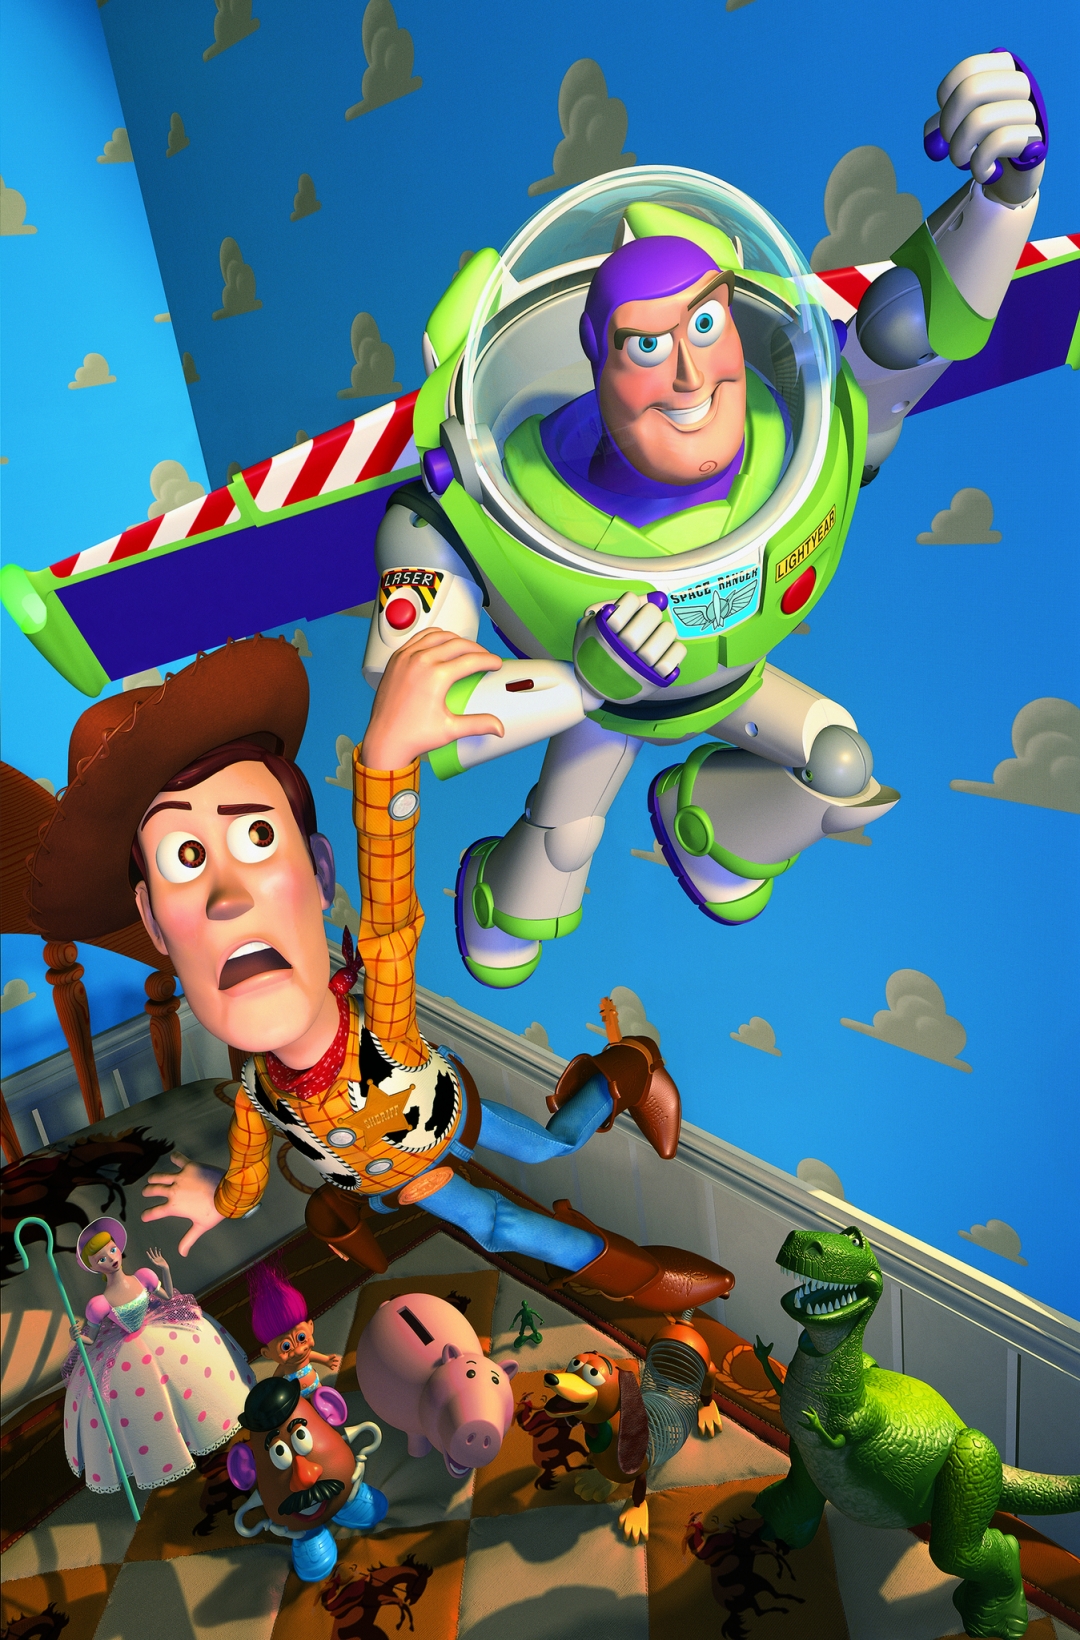 Pixar crtić Toy Story